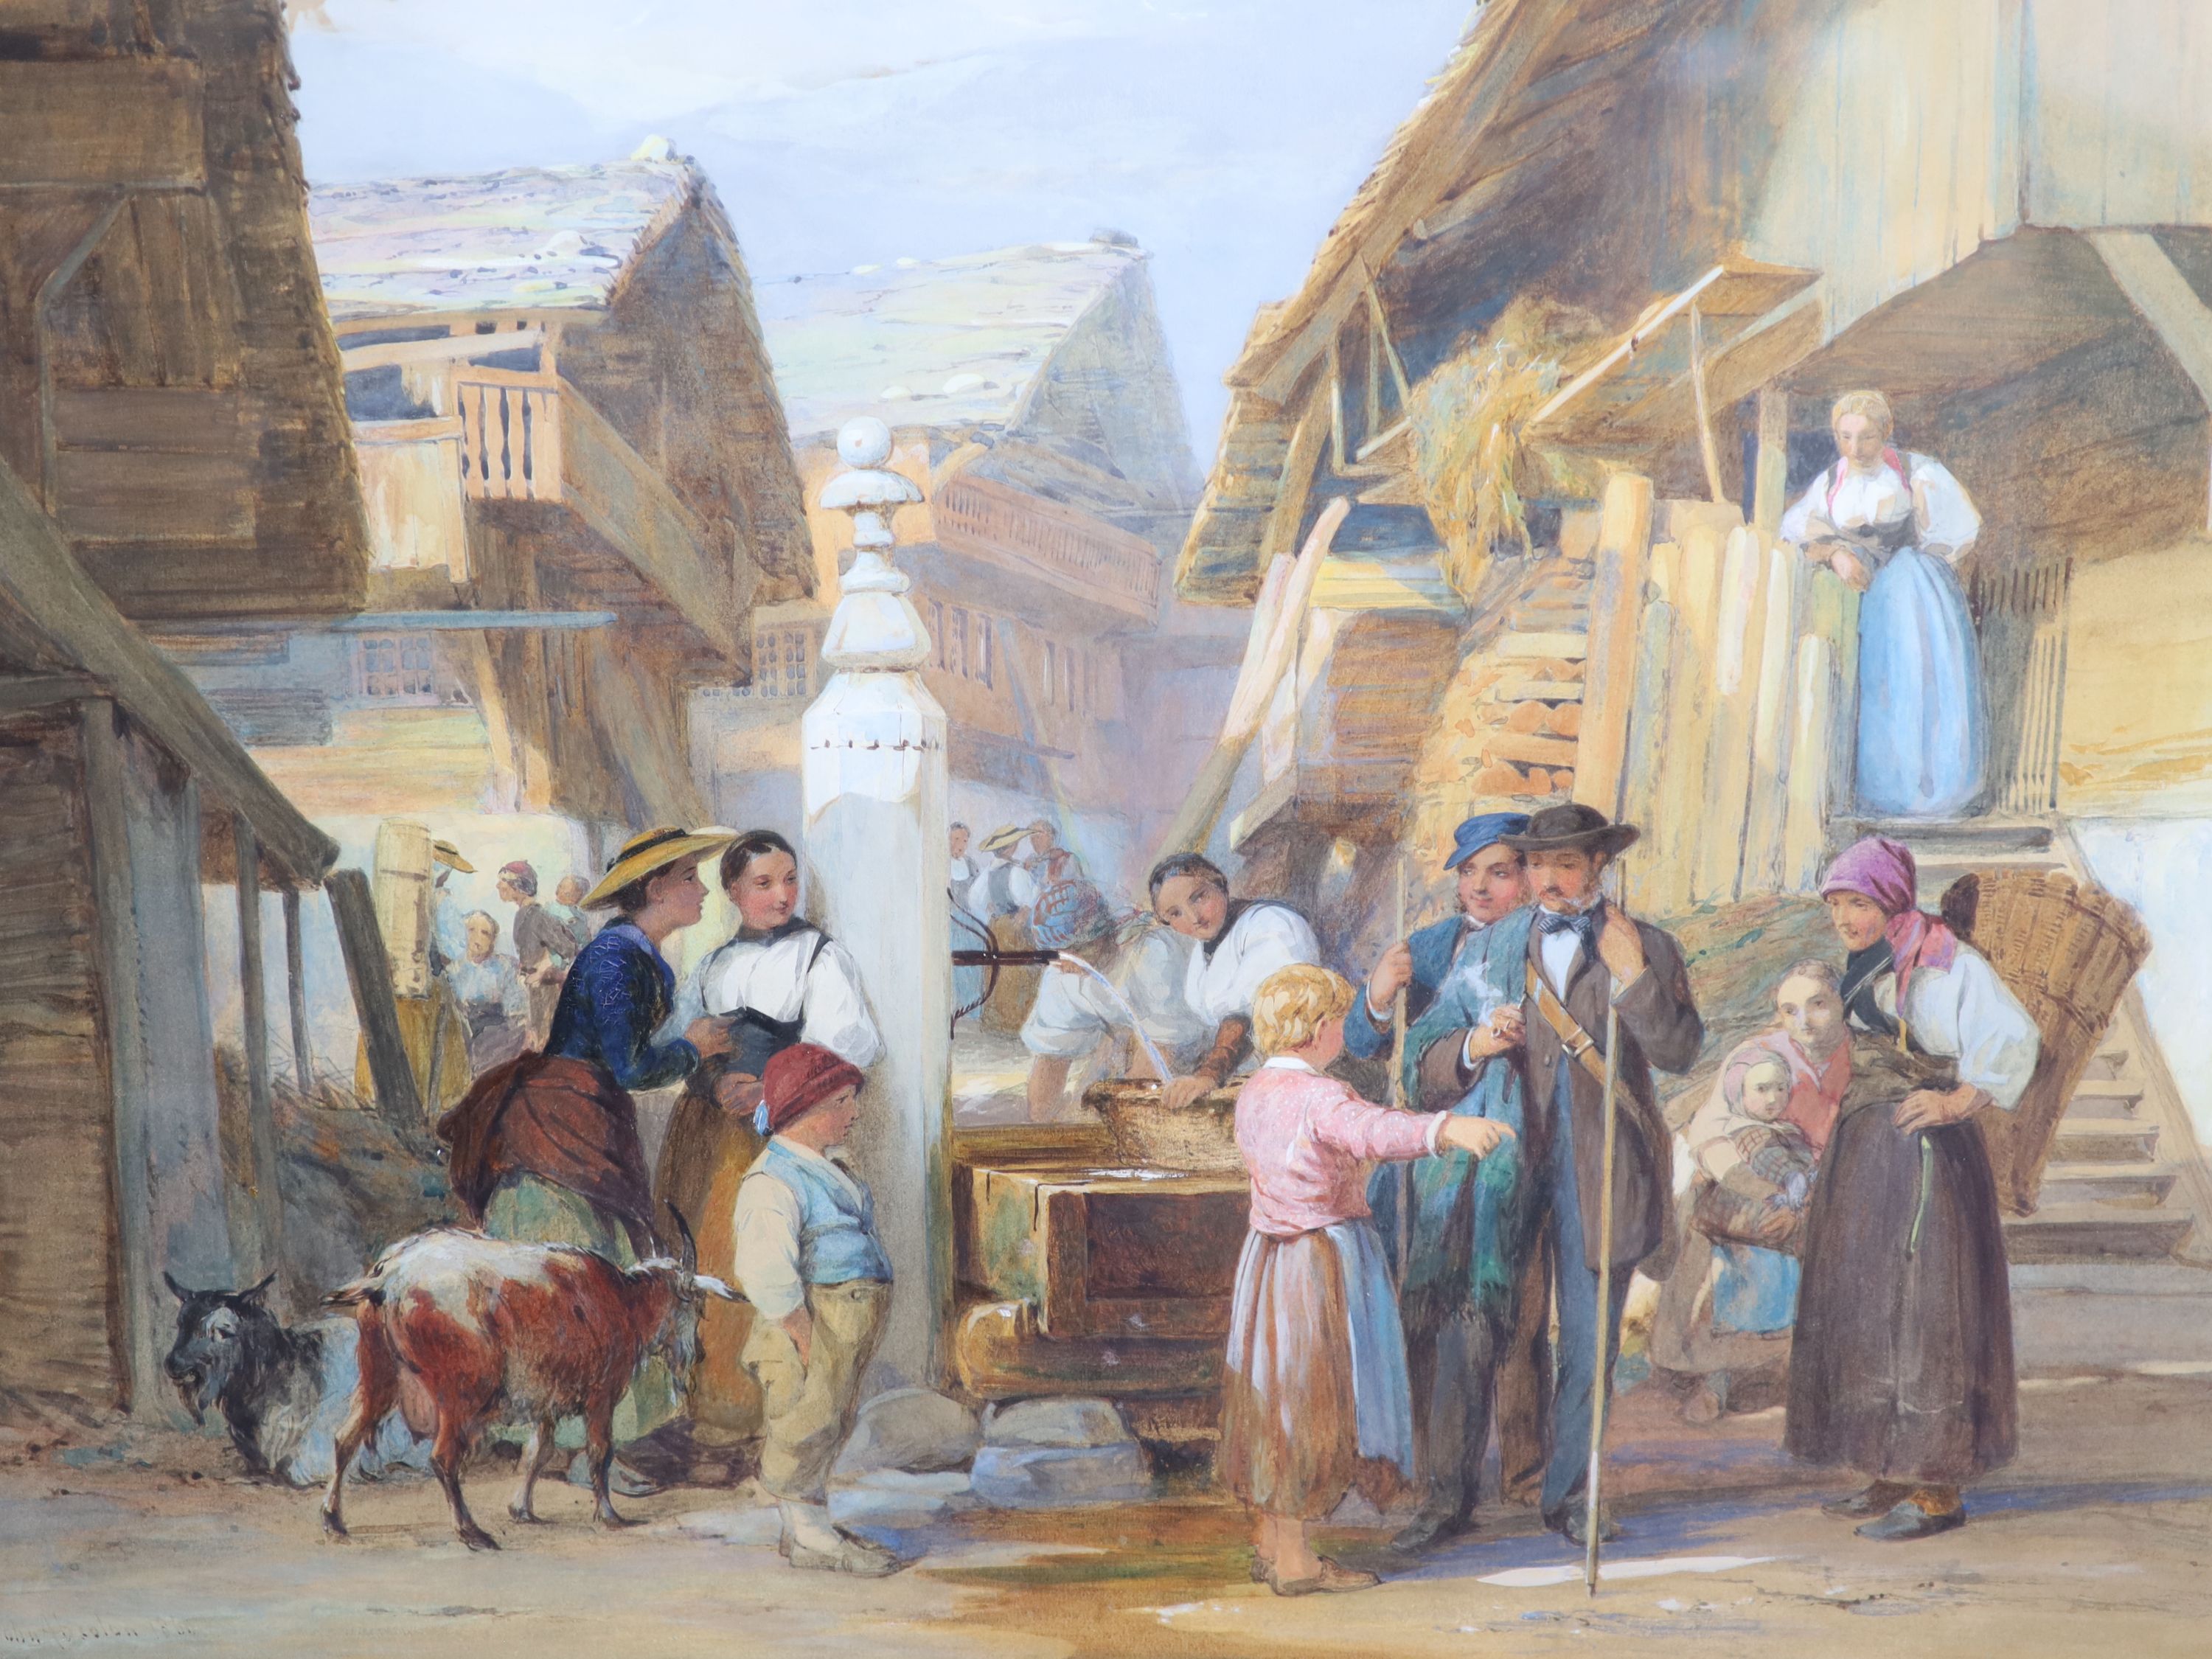 John Absolon (1815-1895), Alpine market scenes, pair of watercolours, 35 x 51 cm